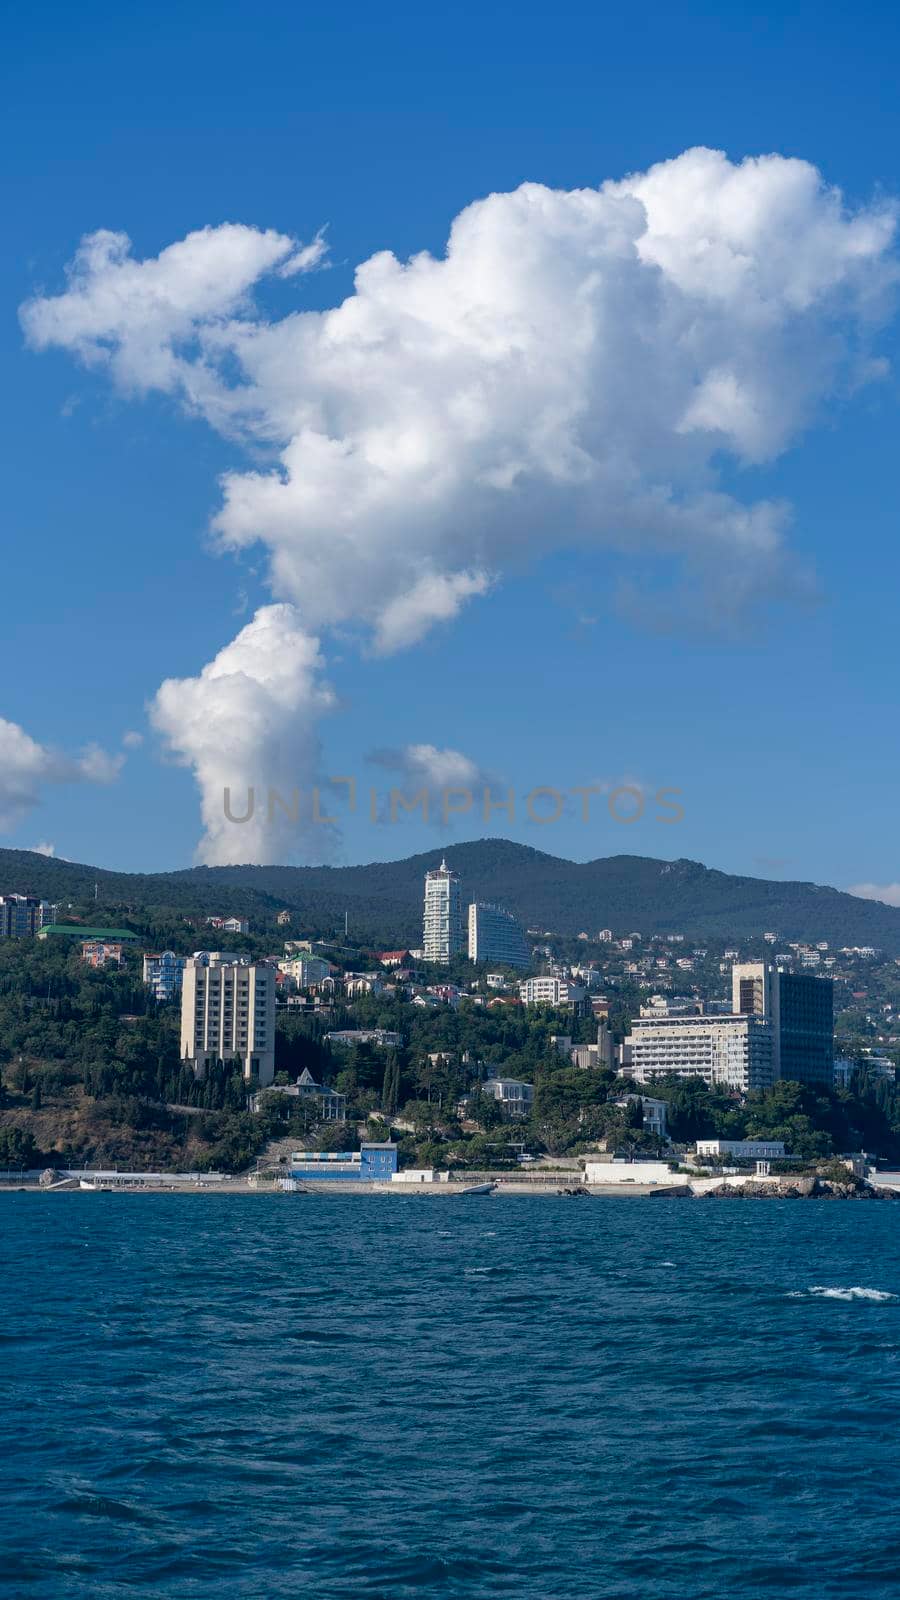 Seascape with a view of the coastline of Yalta, Crimea